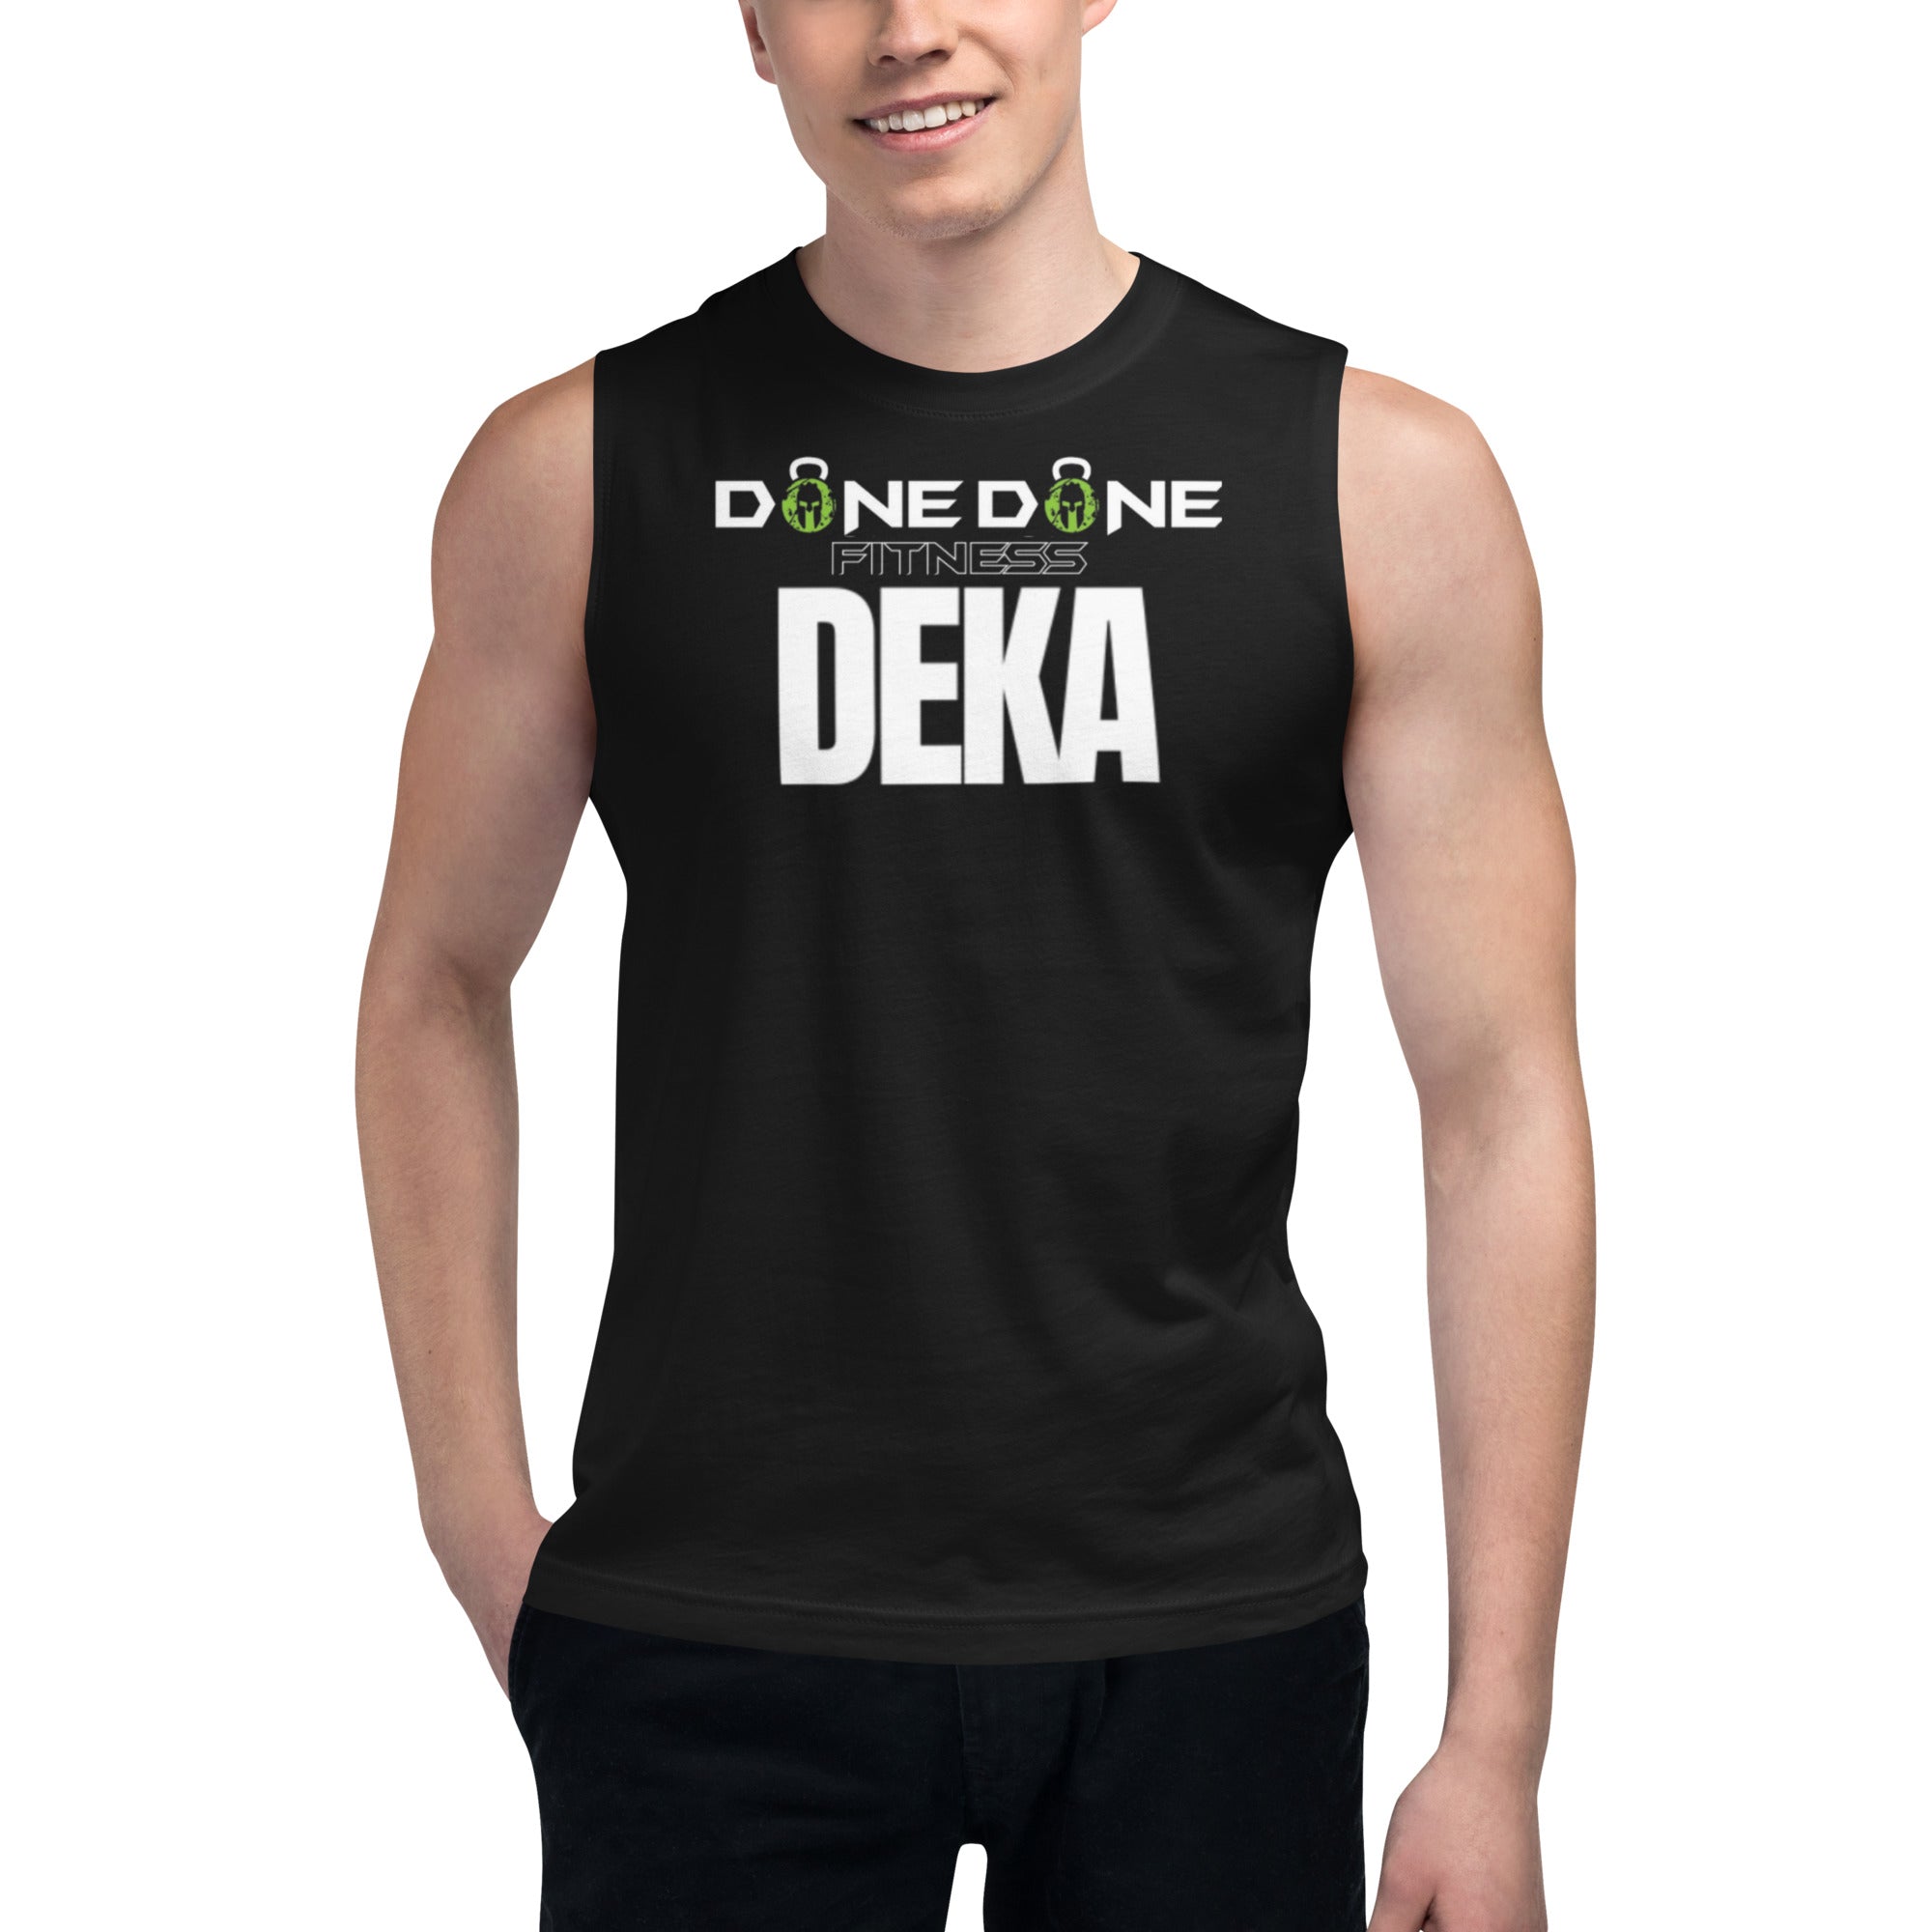 Done Done DEKA Muscle Shirt